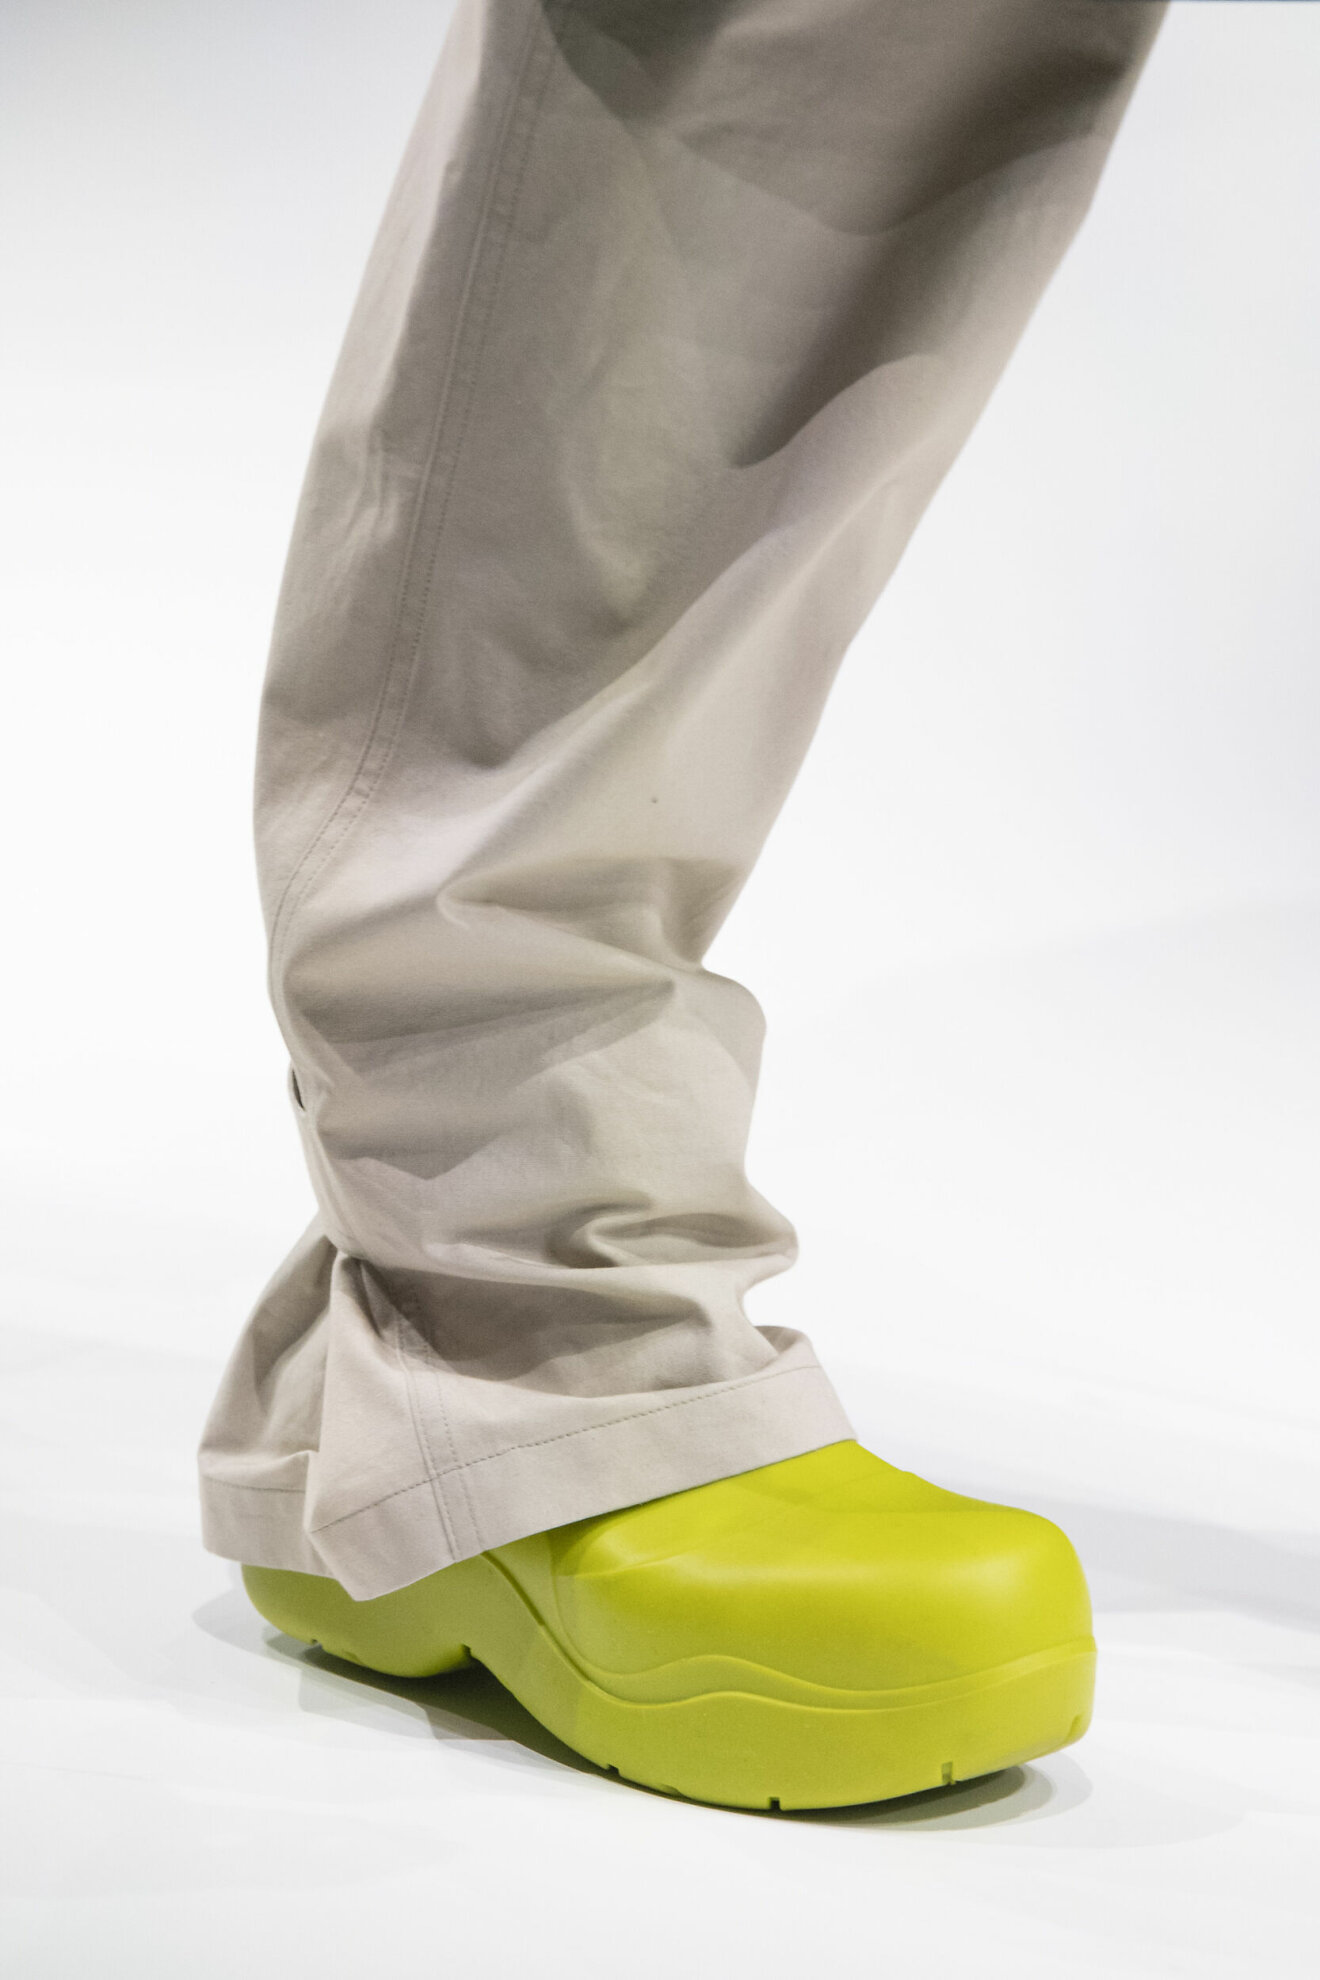 Limegröna puddle boots, stövlar från Bottega Veneta.